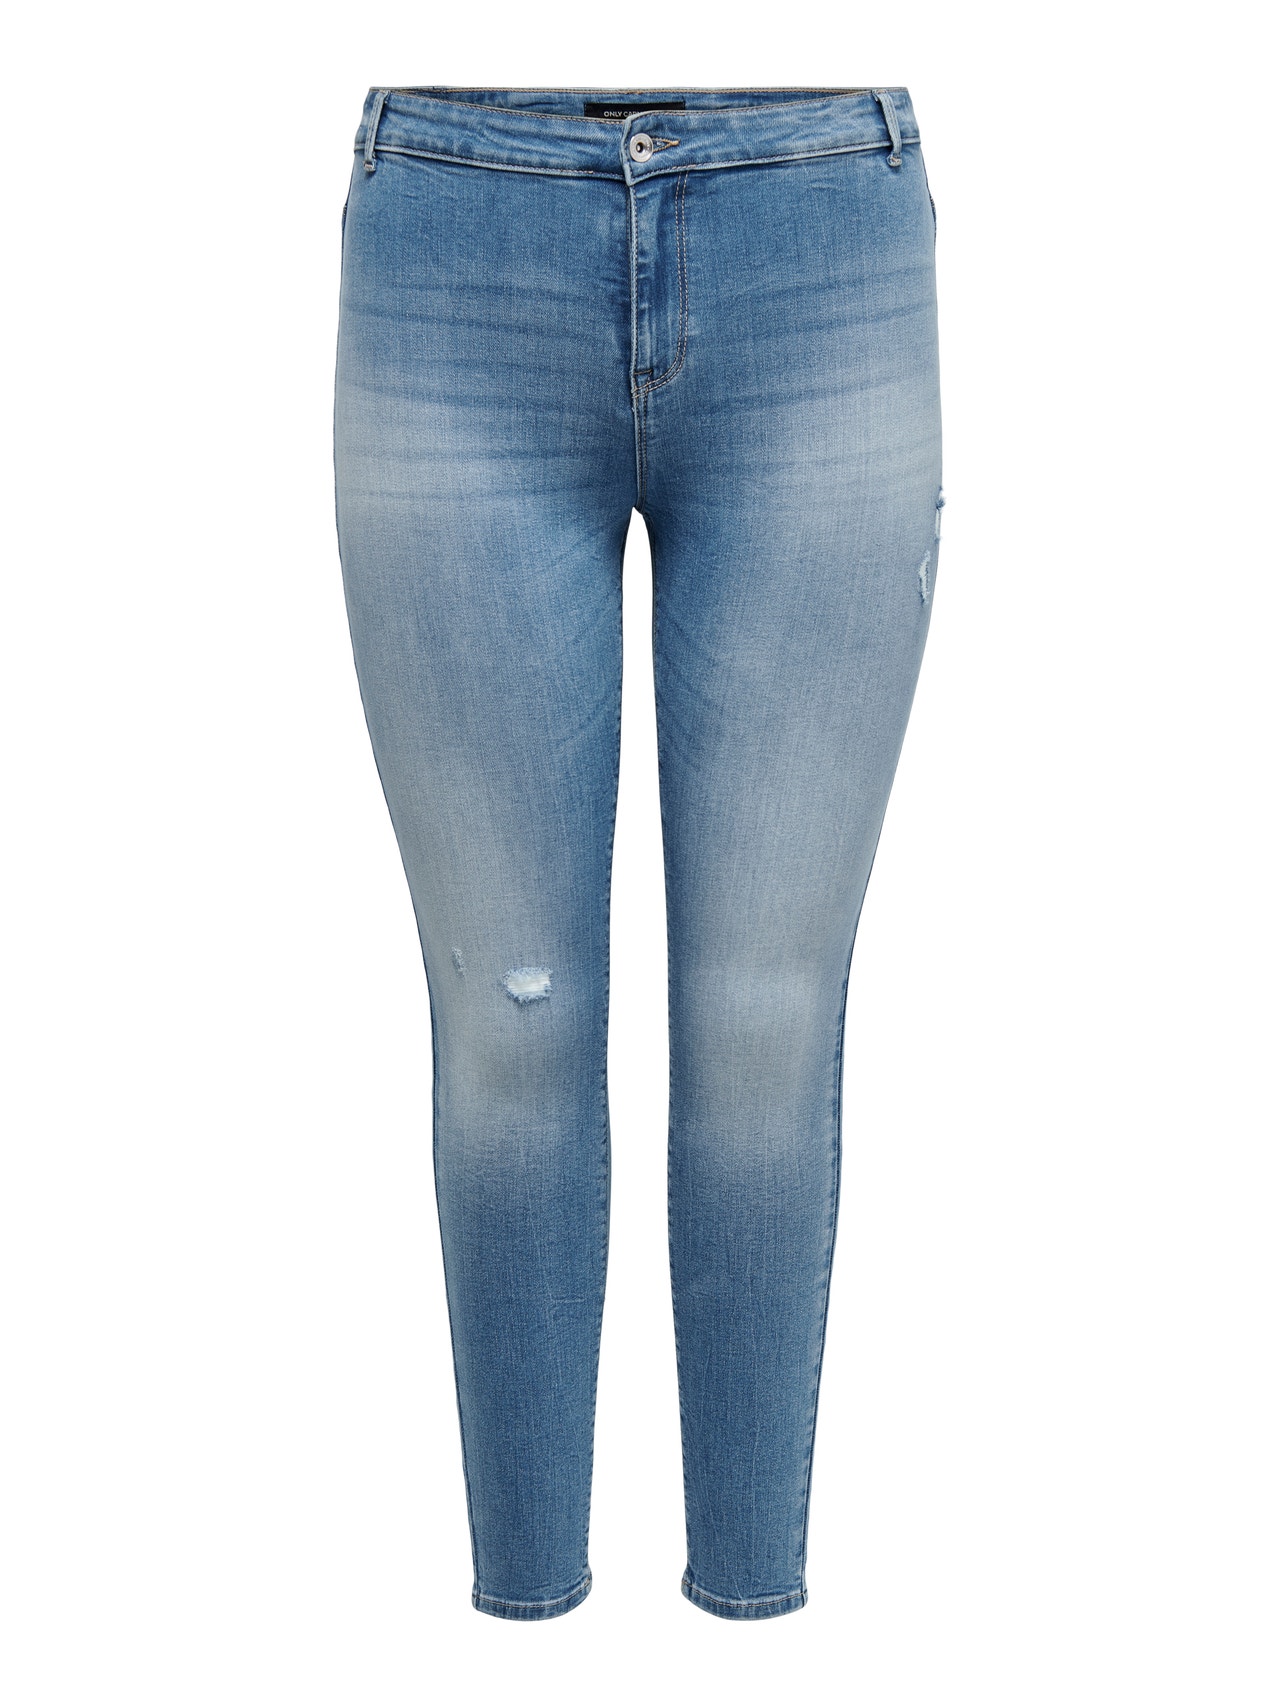 TEX 2XL Skinny Jeans Denim Stretch Jeans Light Blue Jeggings